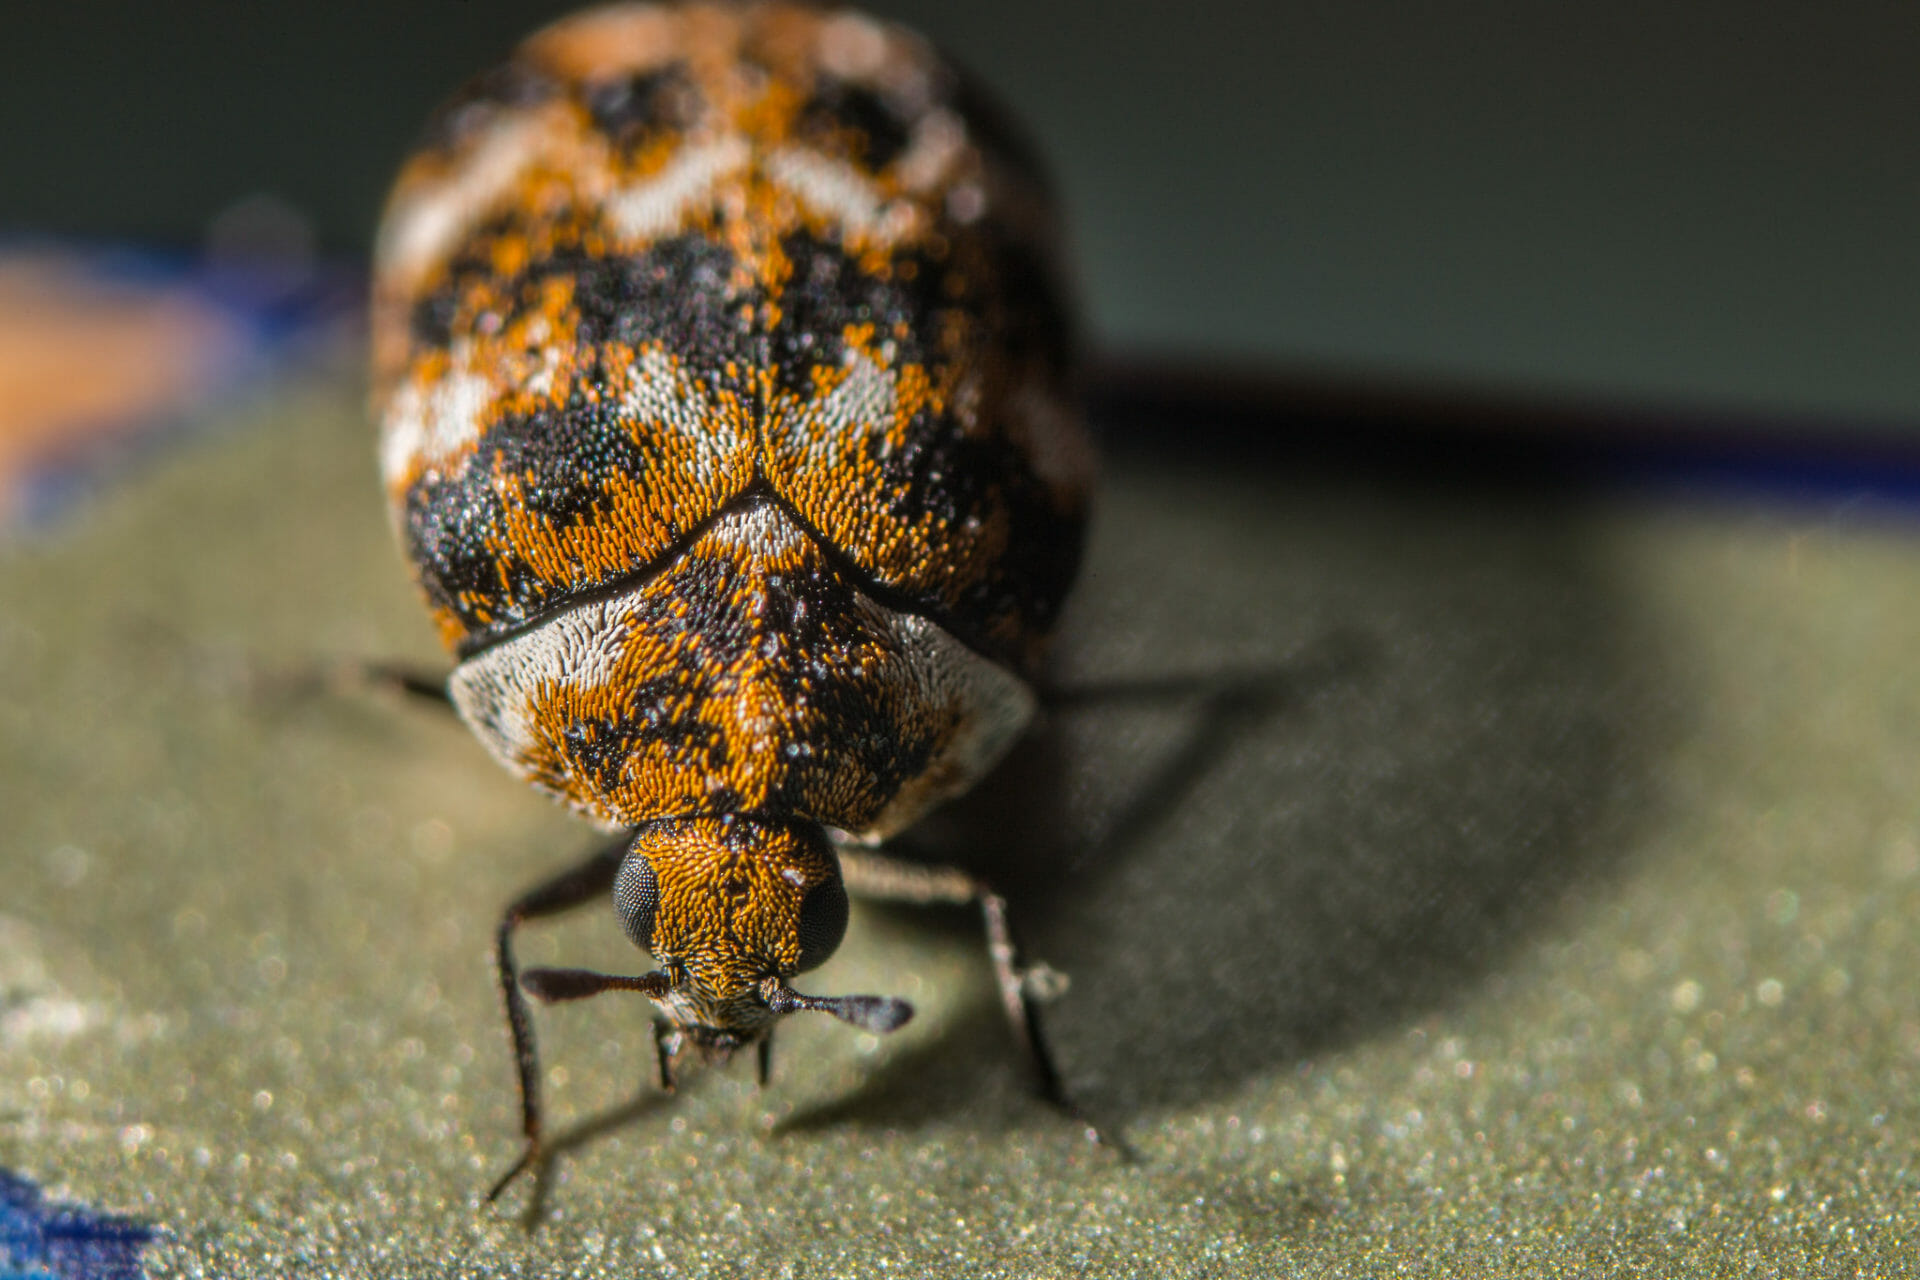 do carpet beetles bite